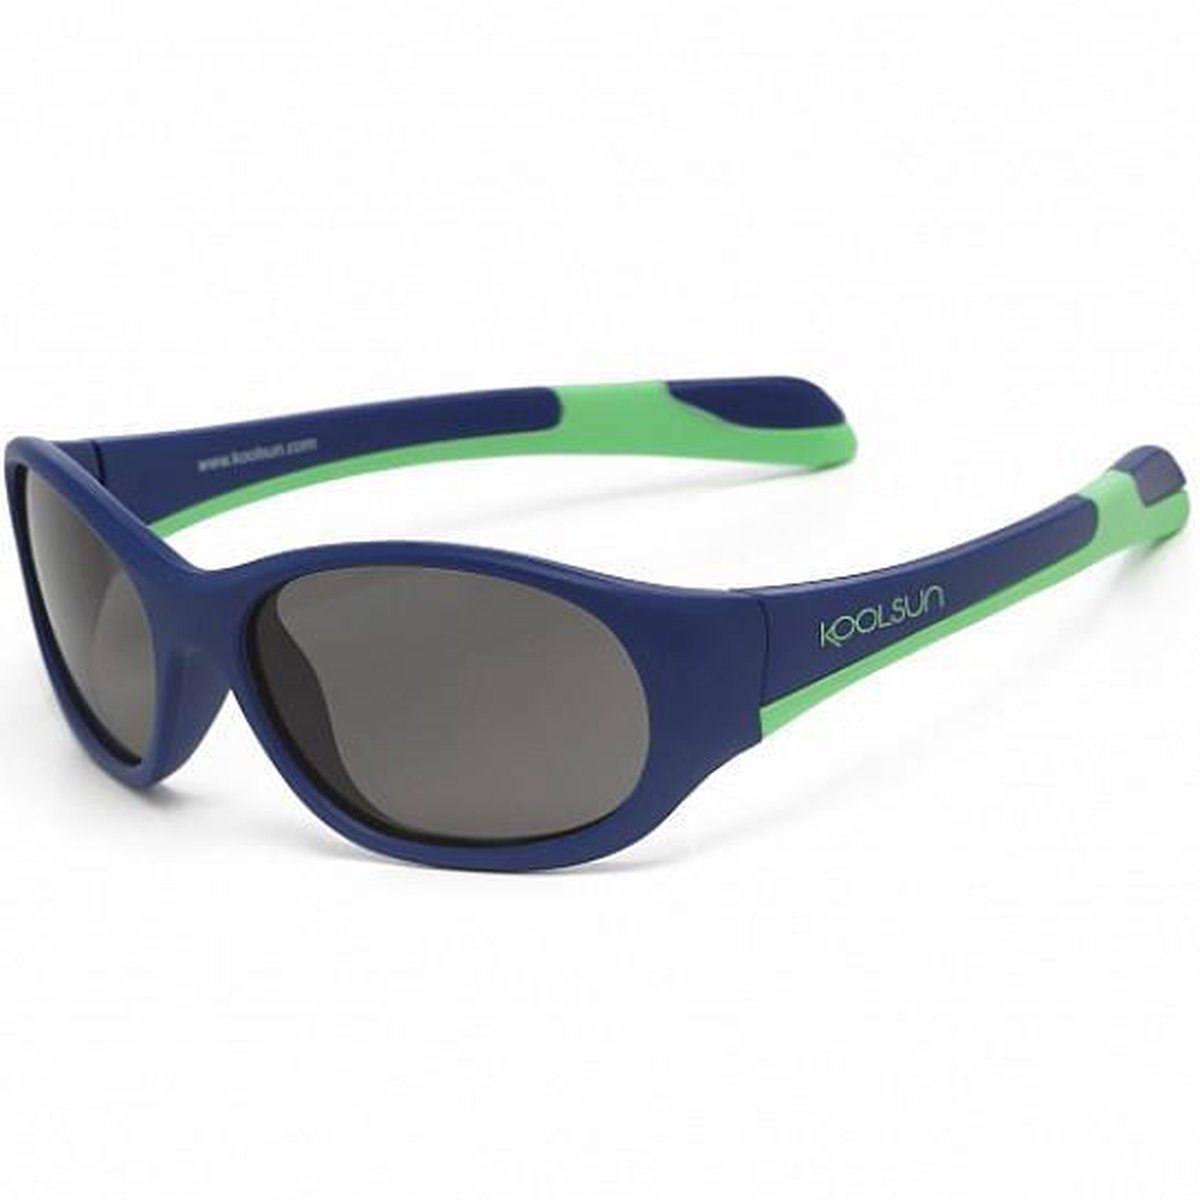 KOOLSUN - Fit - Kinder zonnebril - Navy Spring Bud - 3-6 jaar - UV400 - Categorie 3